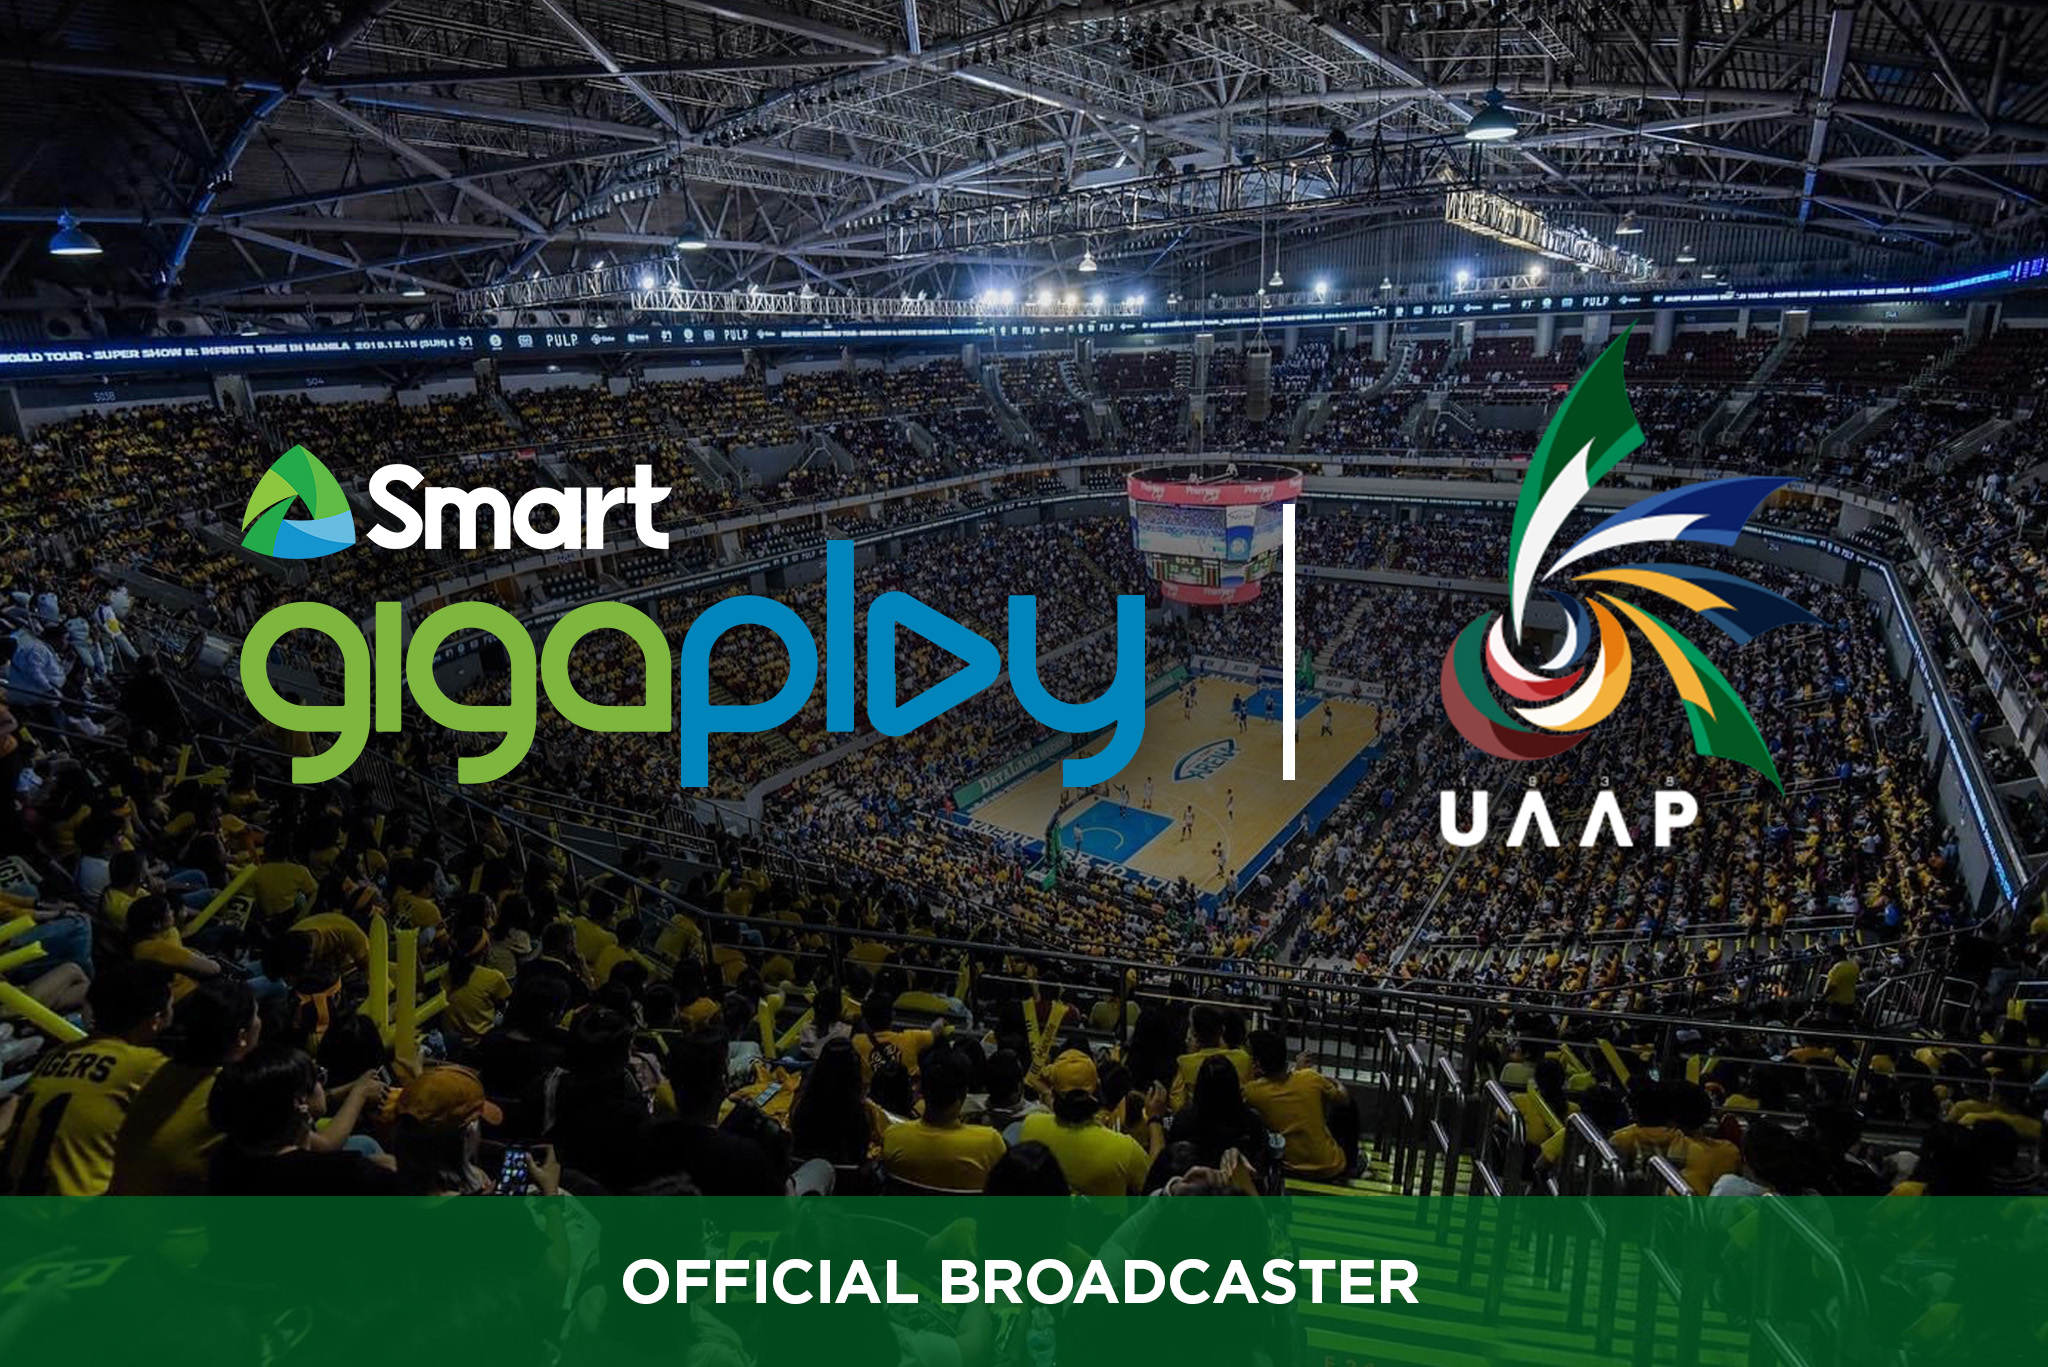 UAAP games to be streamed live via Smart GigaPlay